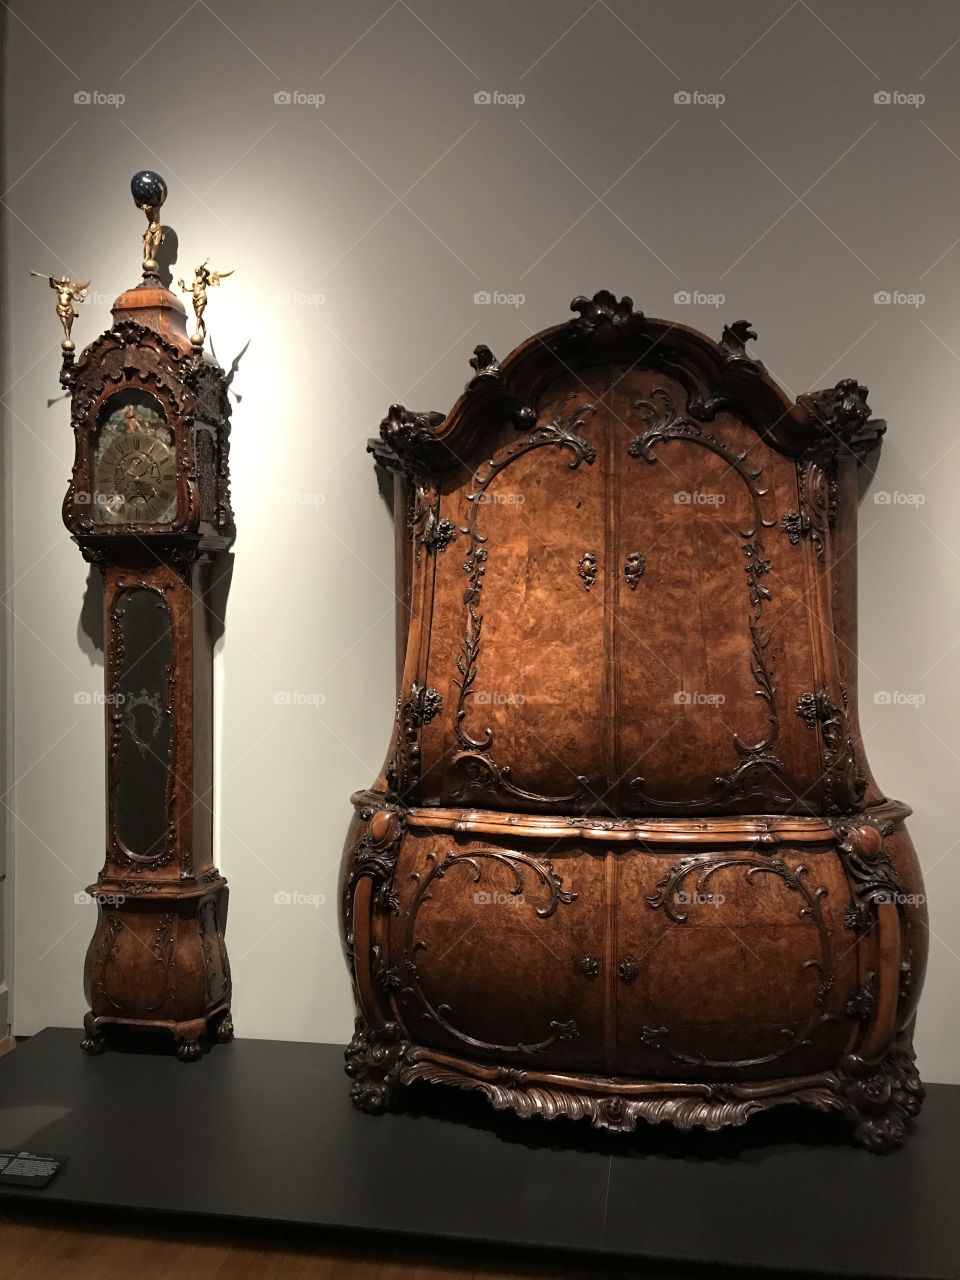 Clock
Chest
Bombay
Ruksmuseum 
Amsterdam 
Netherlands 